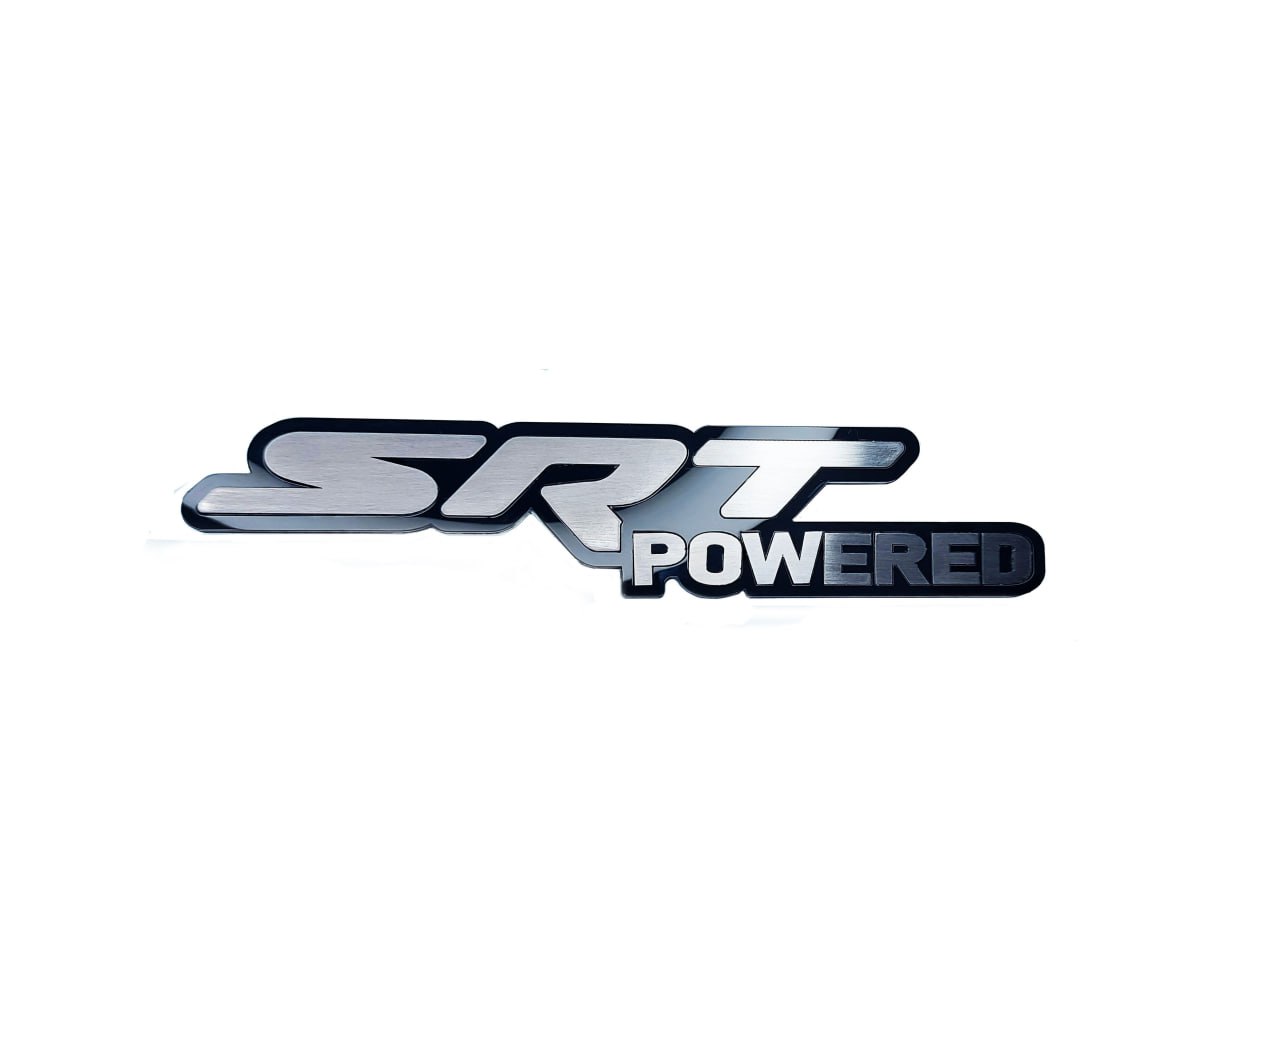 Chrysler tailgate trunk rear emblem with SRT Powered logo - decoinfabric